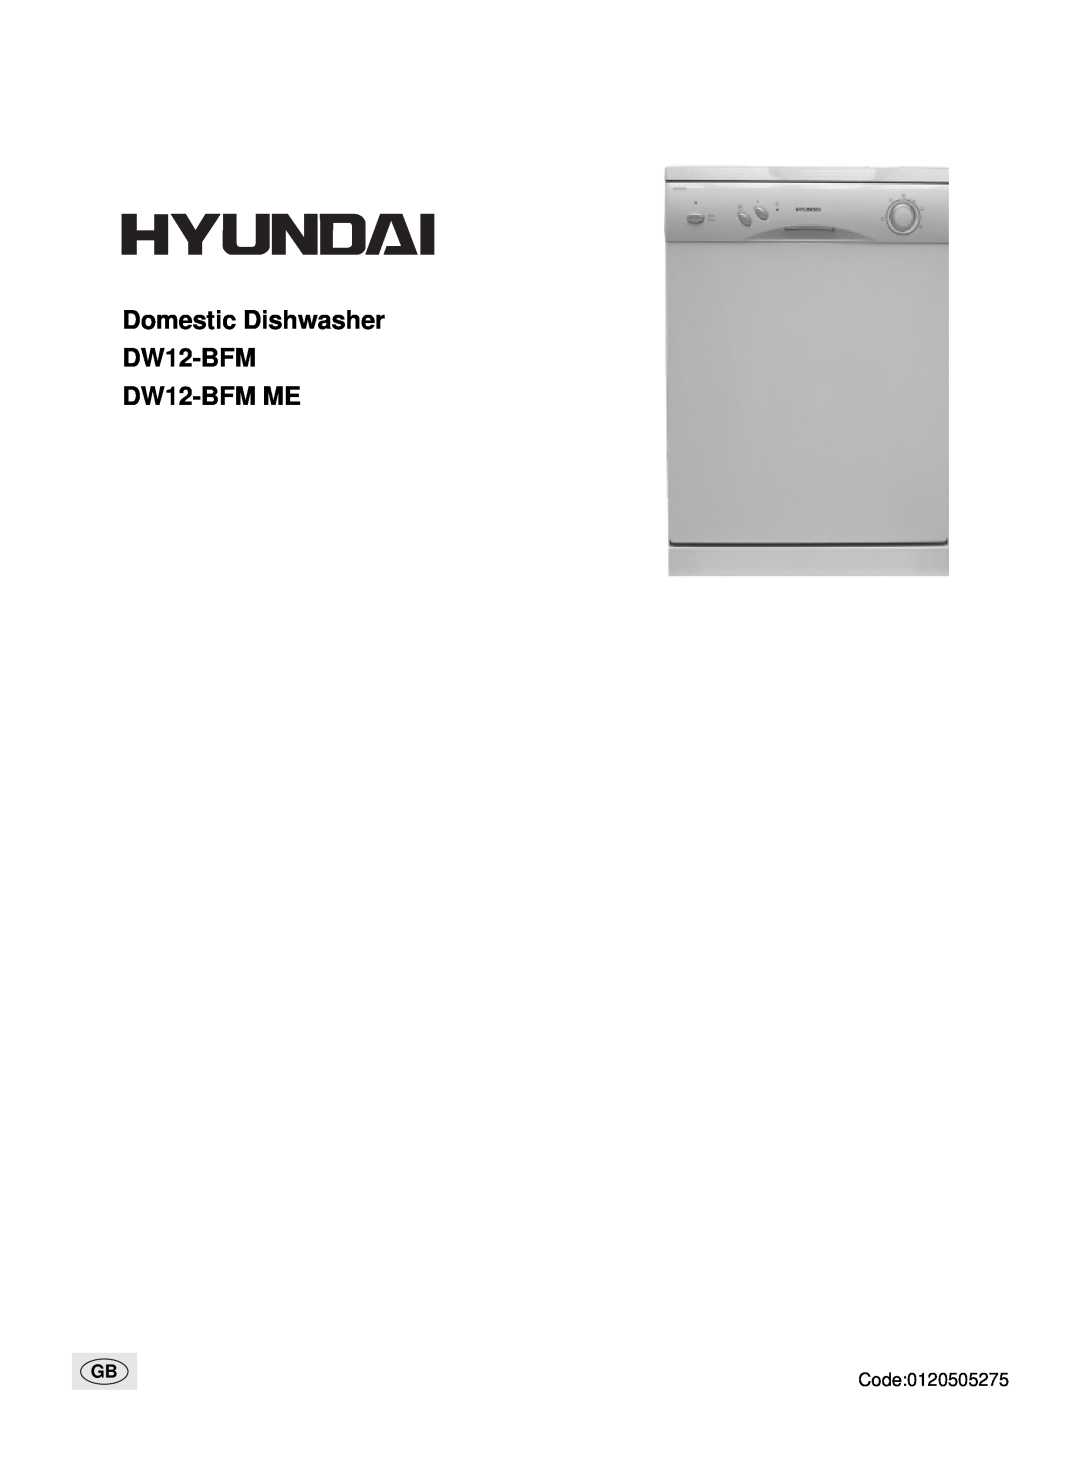 Hyundai IT manual Domestic Dishwasher DW12-BFM DW12-BFM ME, Code0120505275 